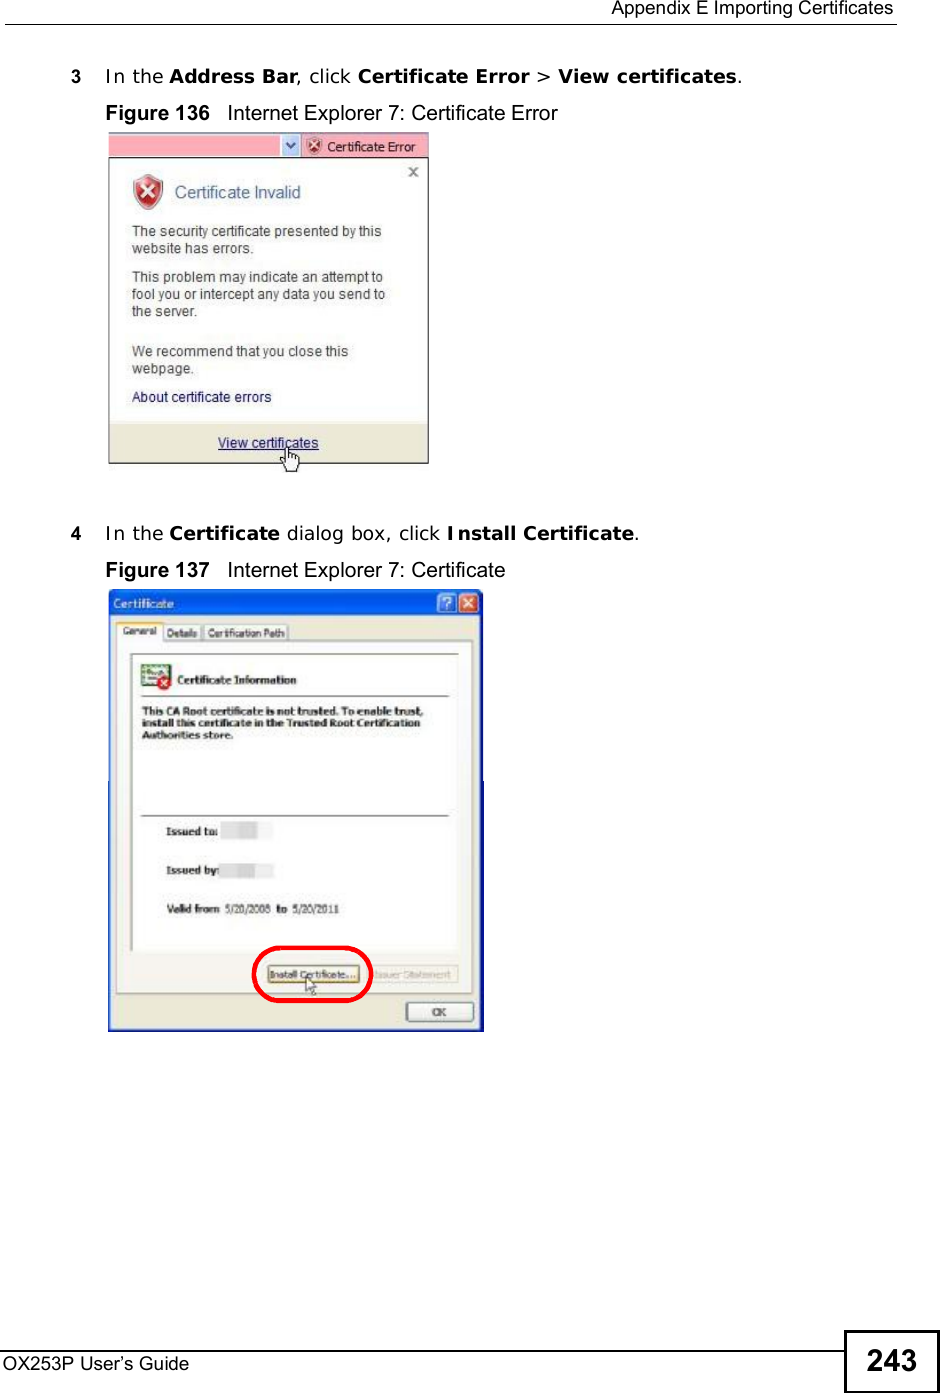  Appendix EImporting CertificatesOX253P User’s Guide 2433In the Address Bar, click Certificate Error &gt; View certificates.Figure 136   Internet Explorer 7: Certificate Error4In the Certificate dialog box, click Install Certificate.Figure 137   Internet Explorer 7: Certificate